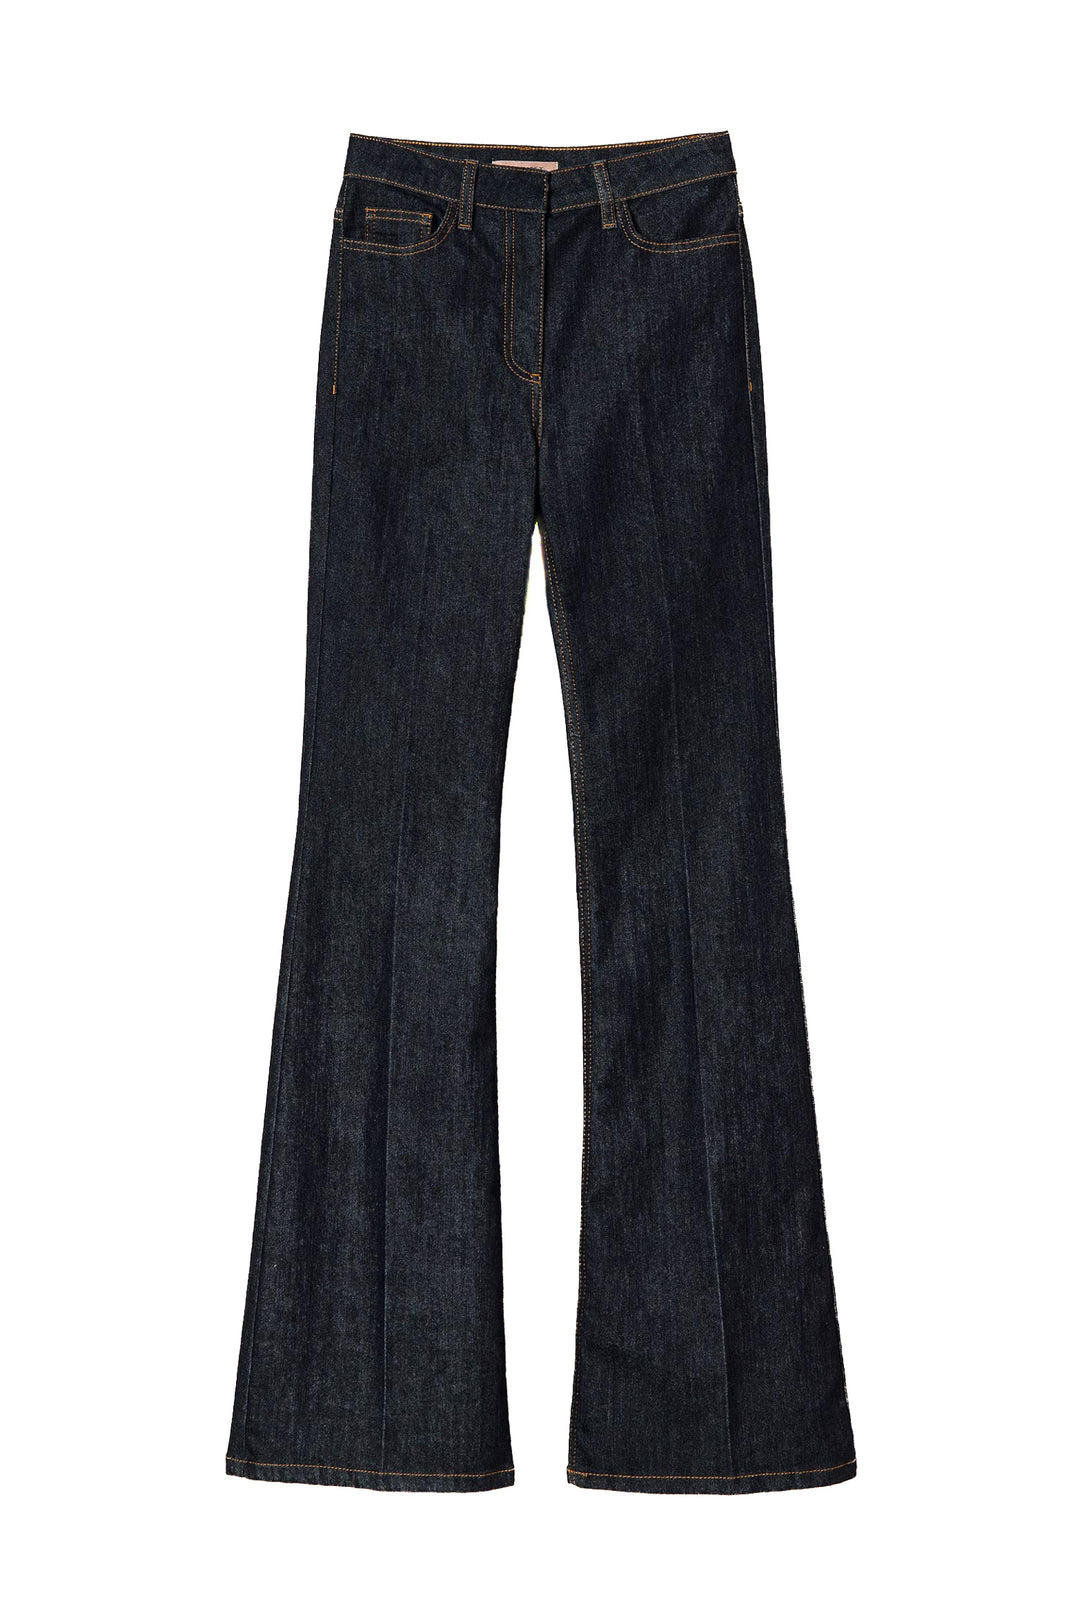 TWINSET Jeans flare cinque tasche in denim scuro - Mancinelli 1954